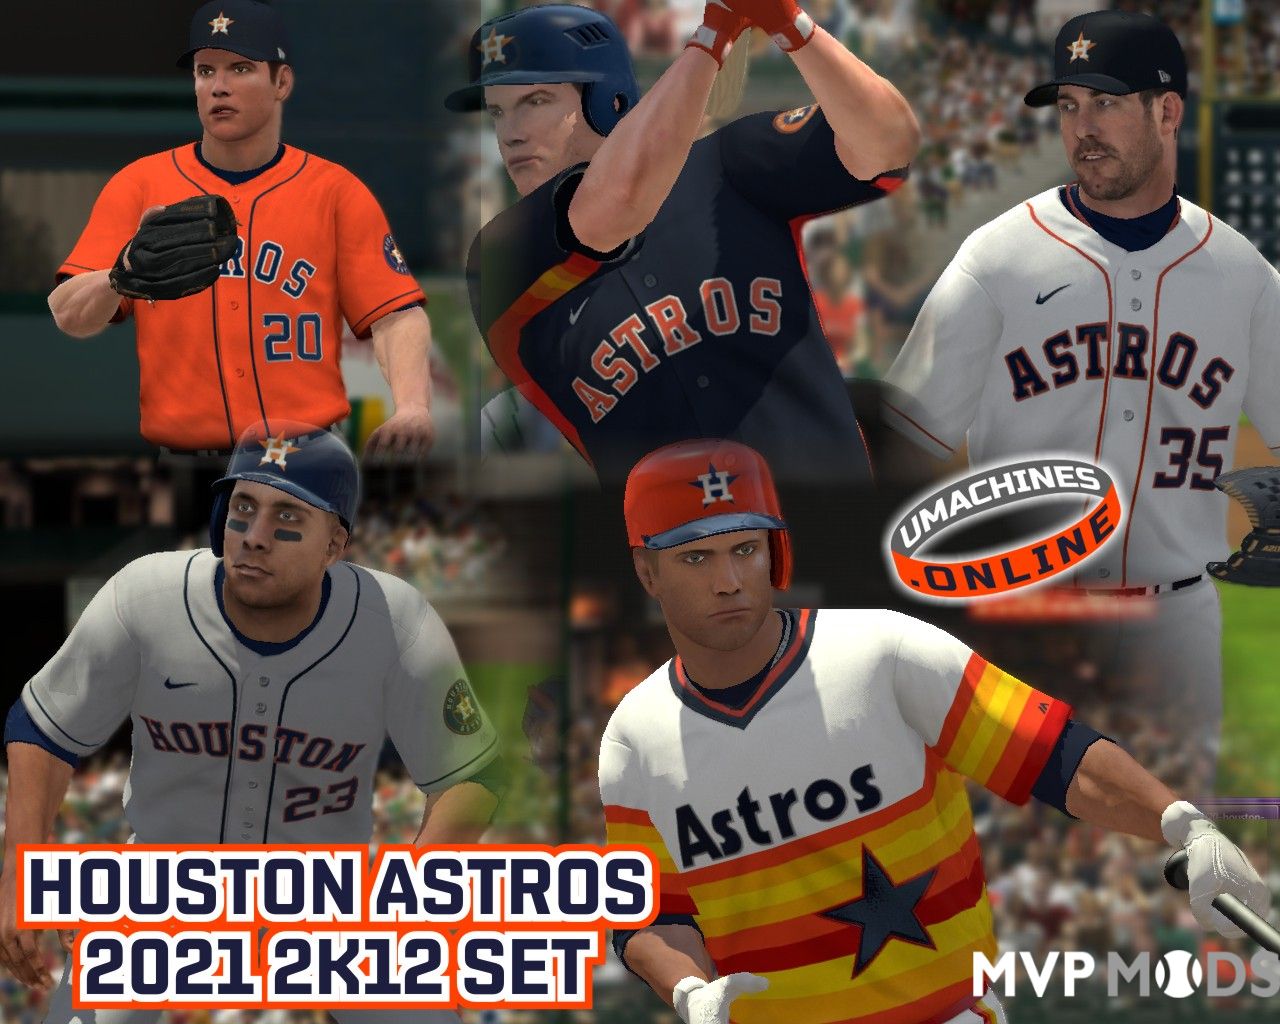 2021-2022 Houstos Astros Uniform Set - Uniforms - MVP Mods